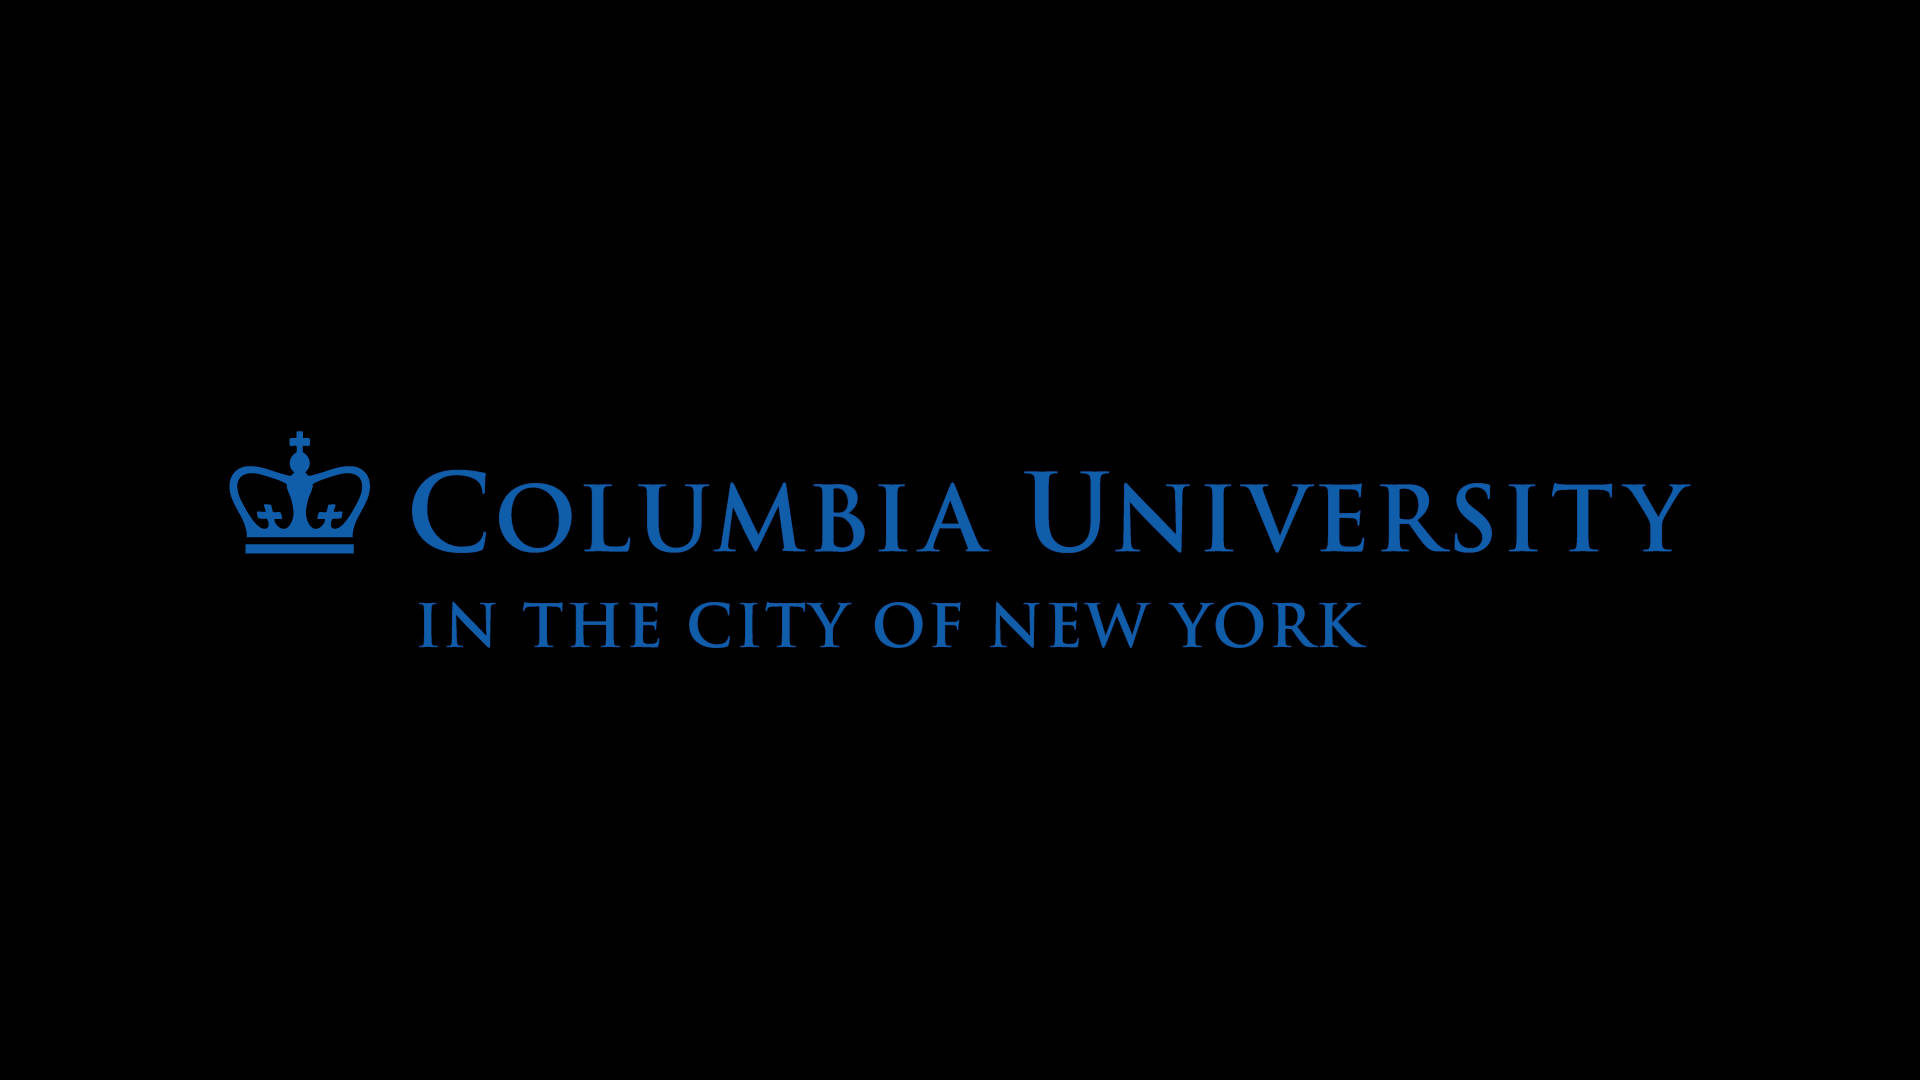 University Of Columbia 1920 X 1080 Wallpaper